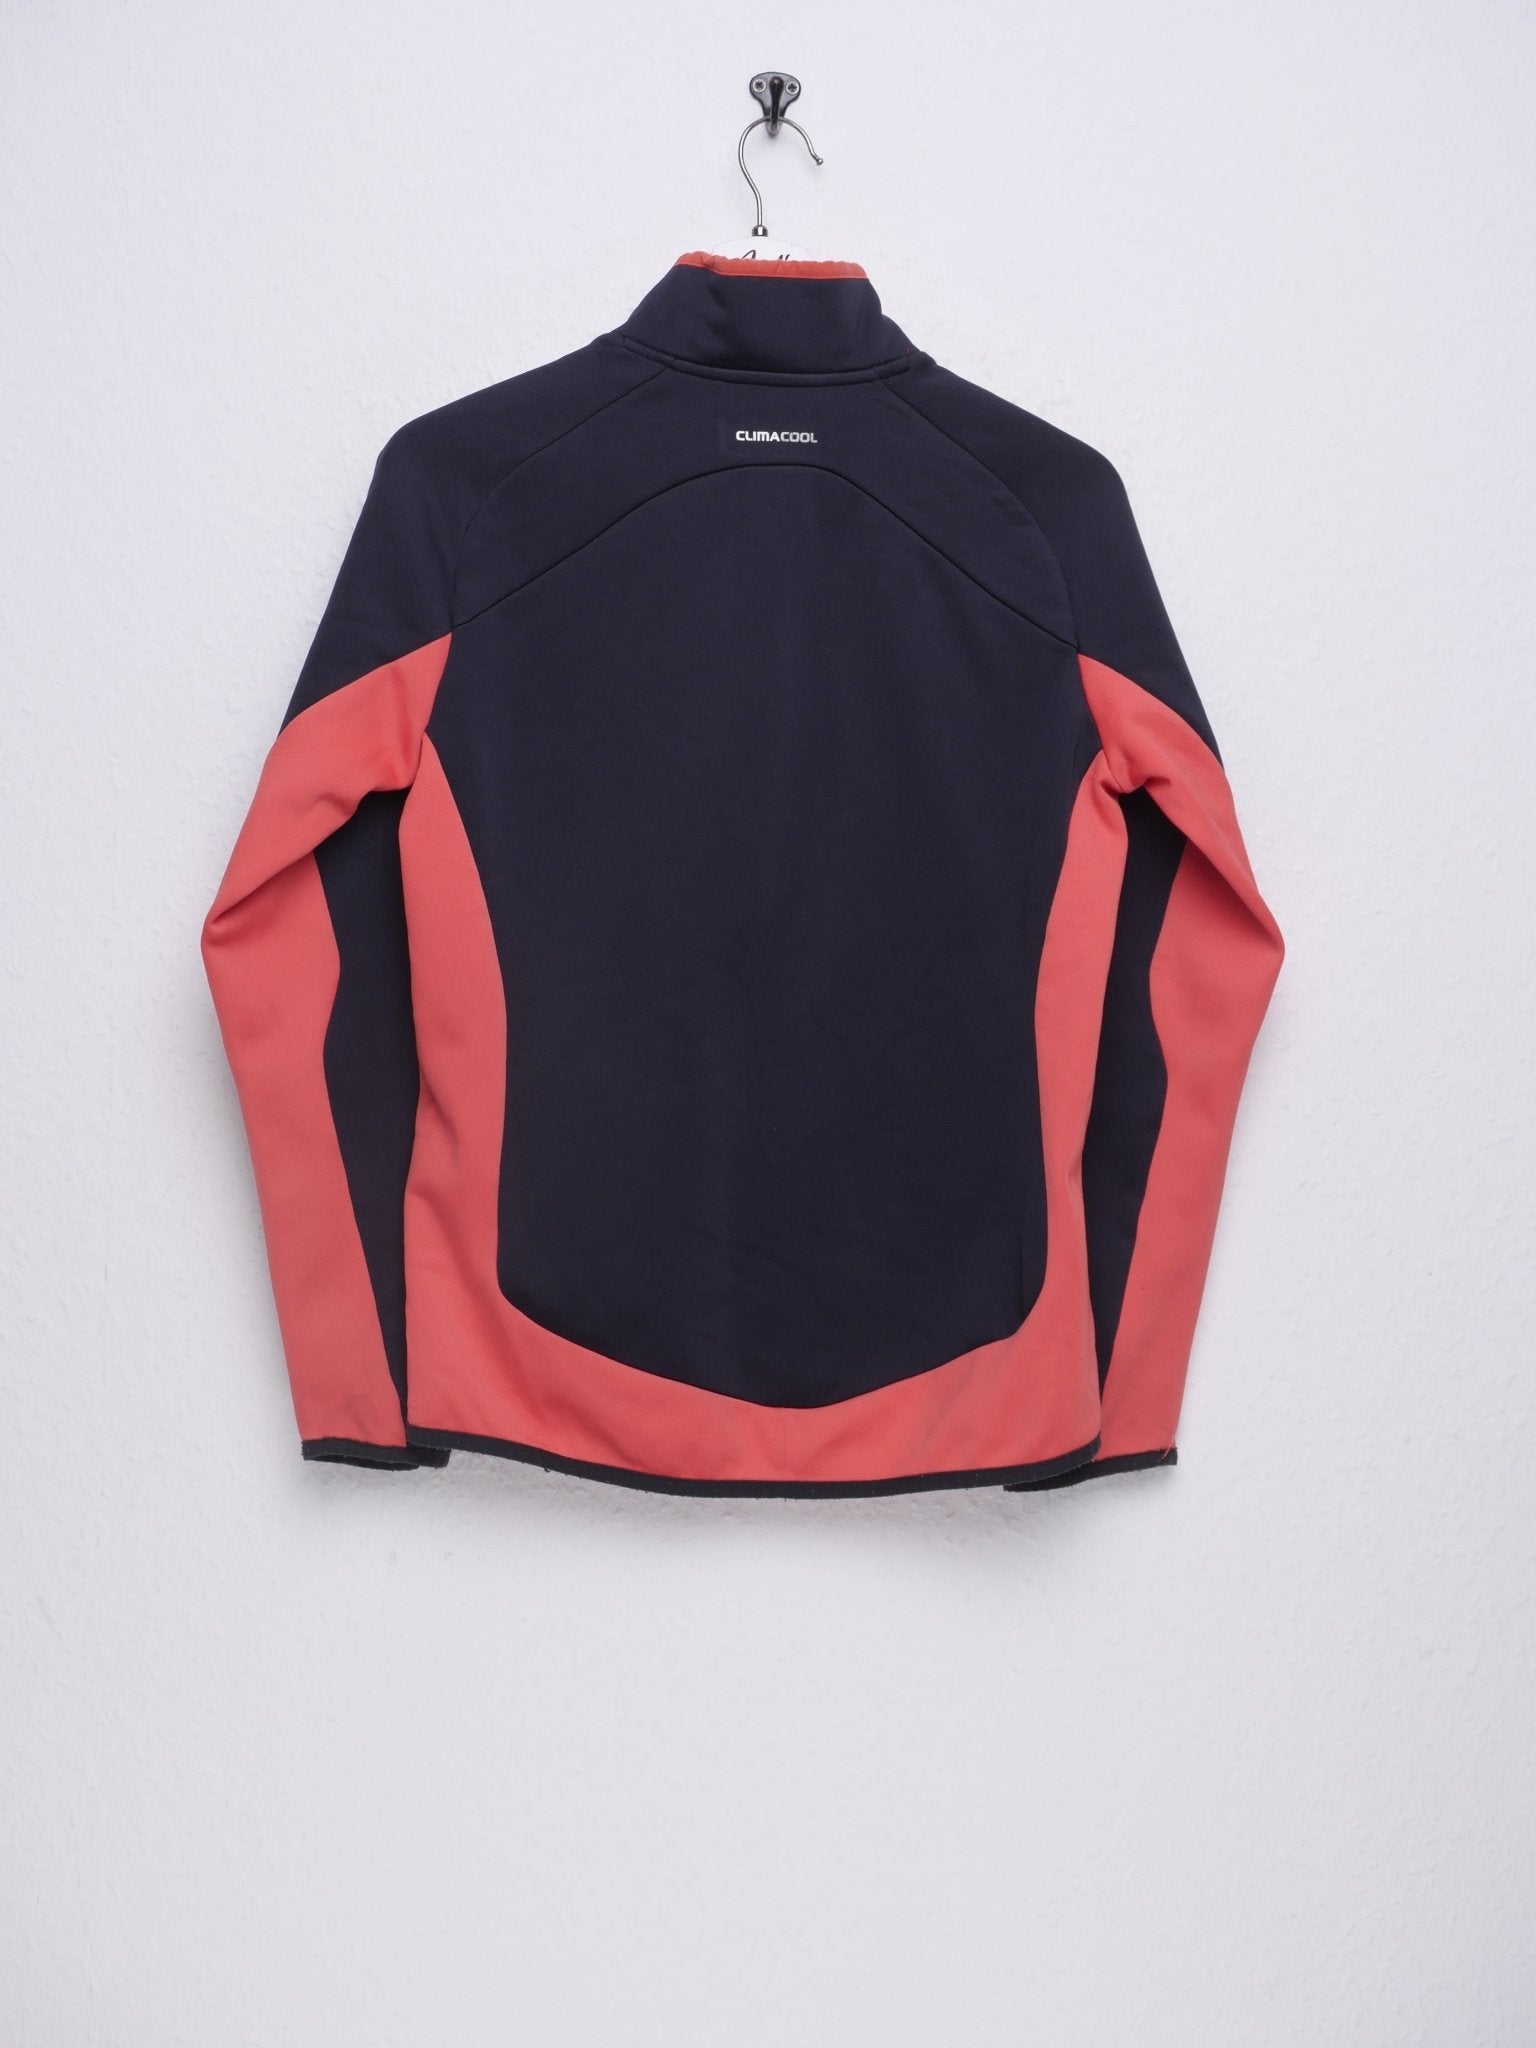 Adidas printed Logo two toned 'England' international Track Jacke - Peeces